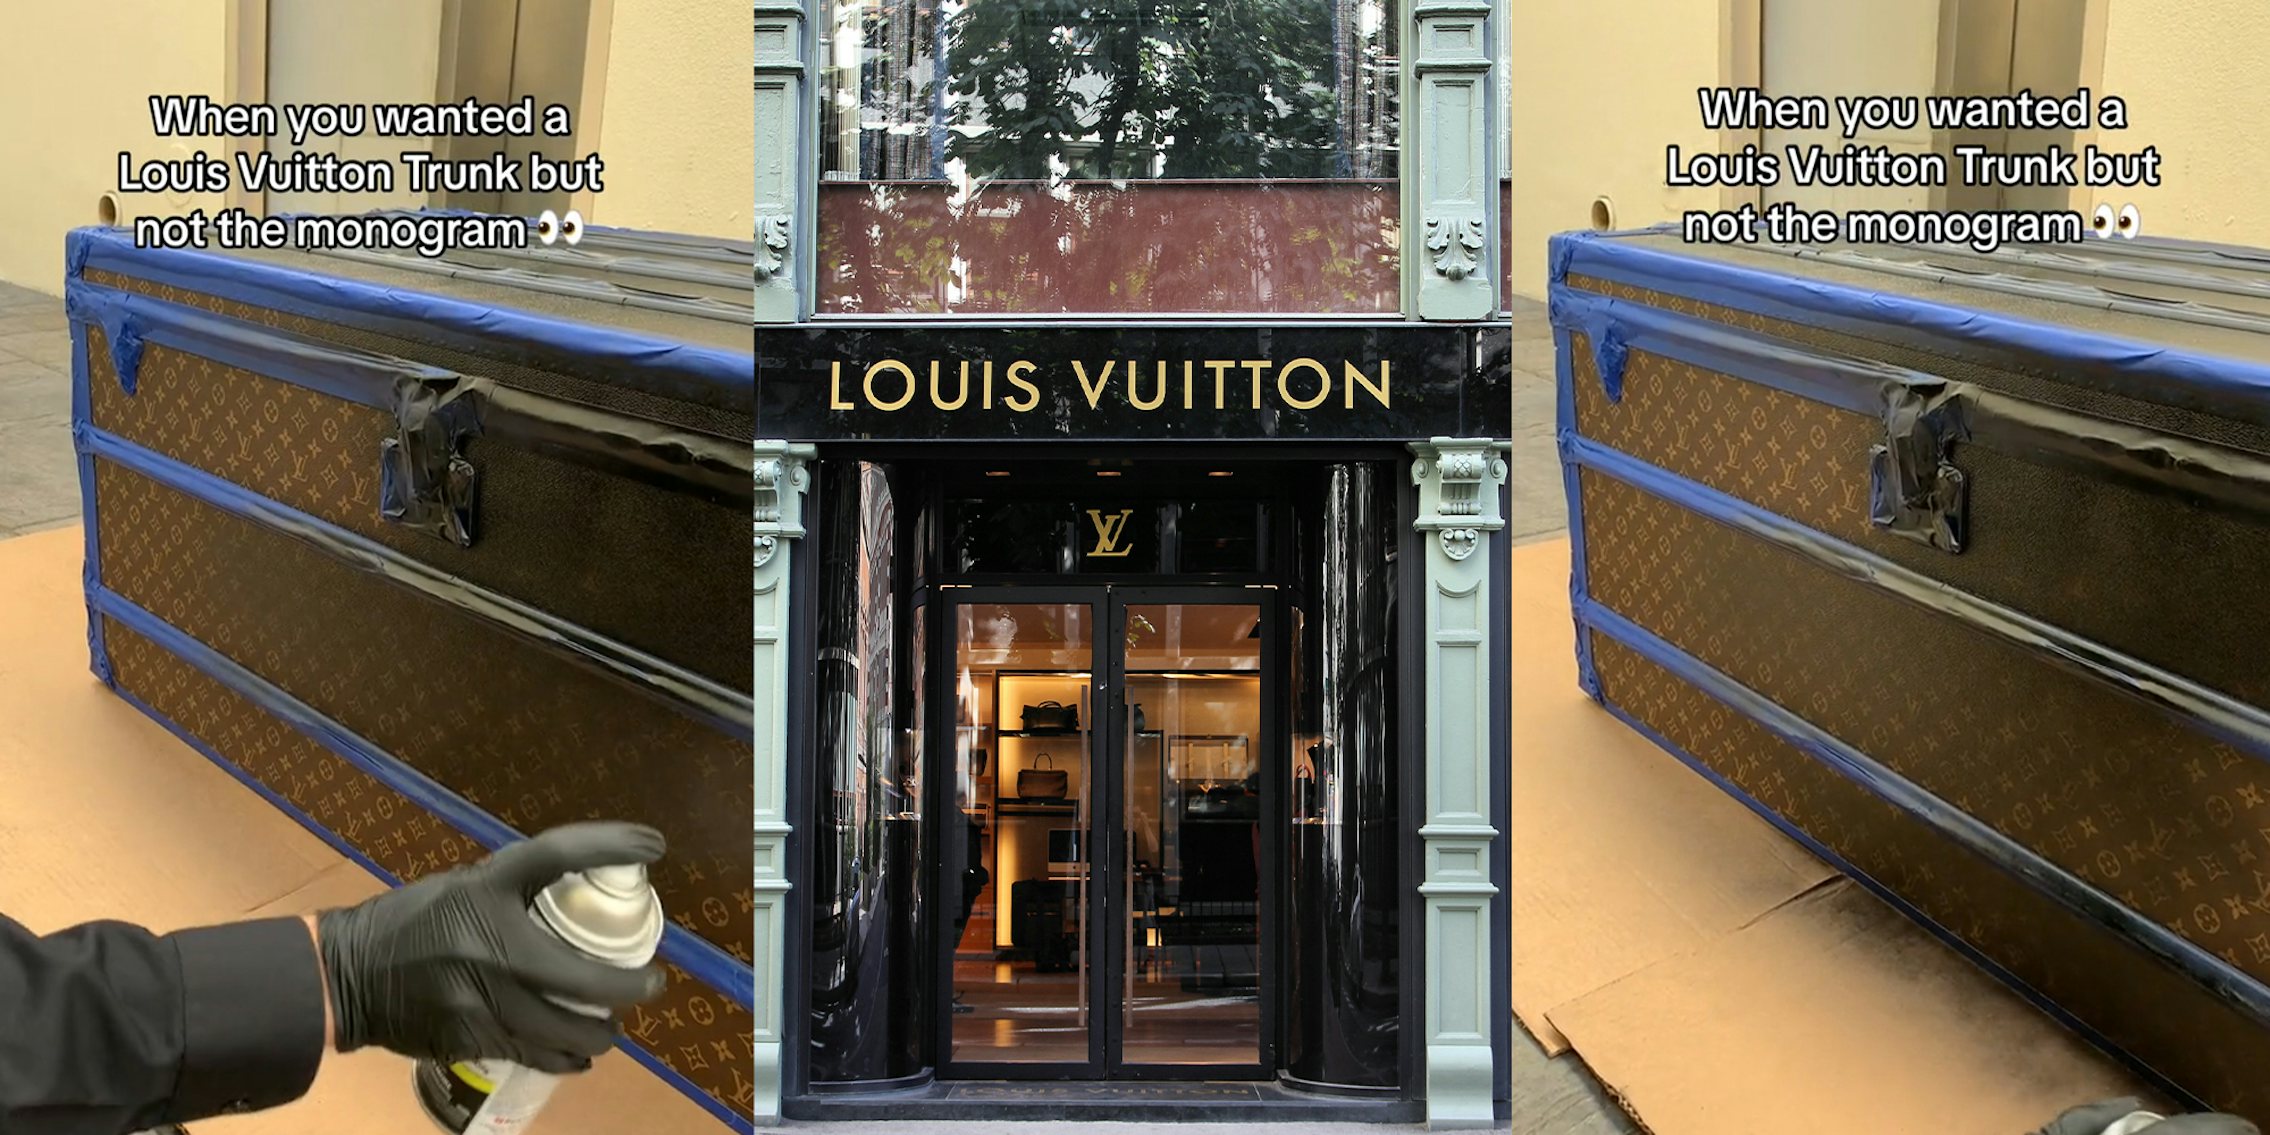 Louis Vuitton artist spray-paints monogrammed trunk black